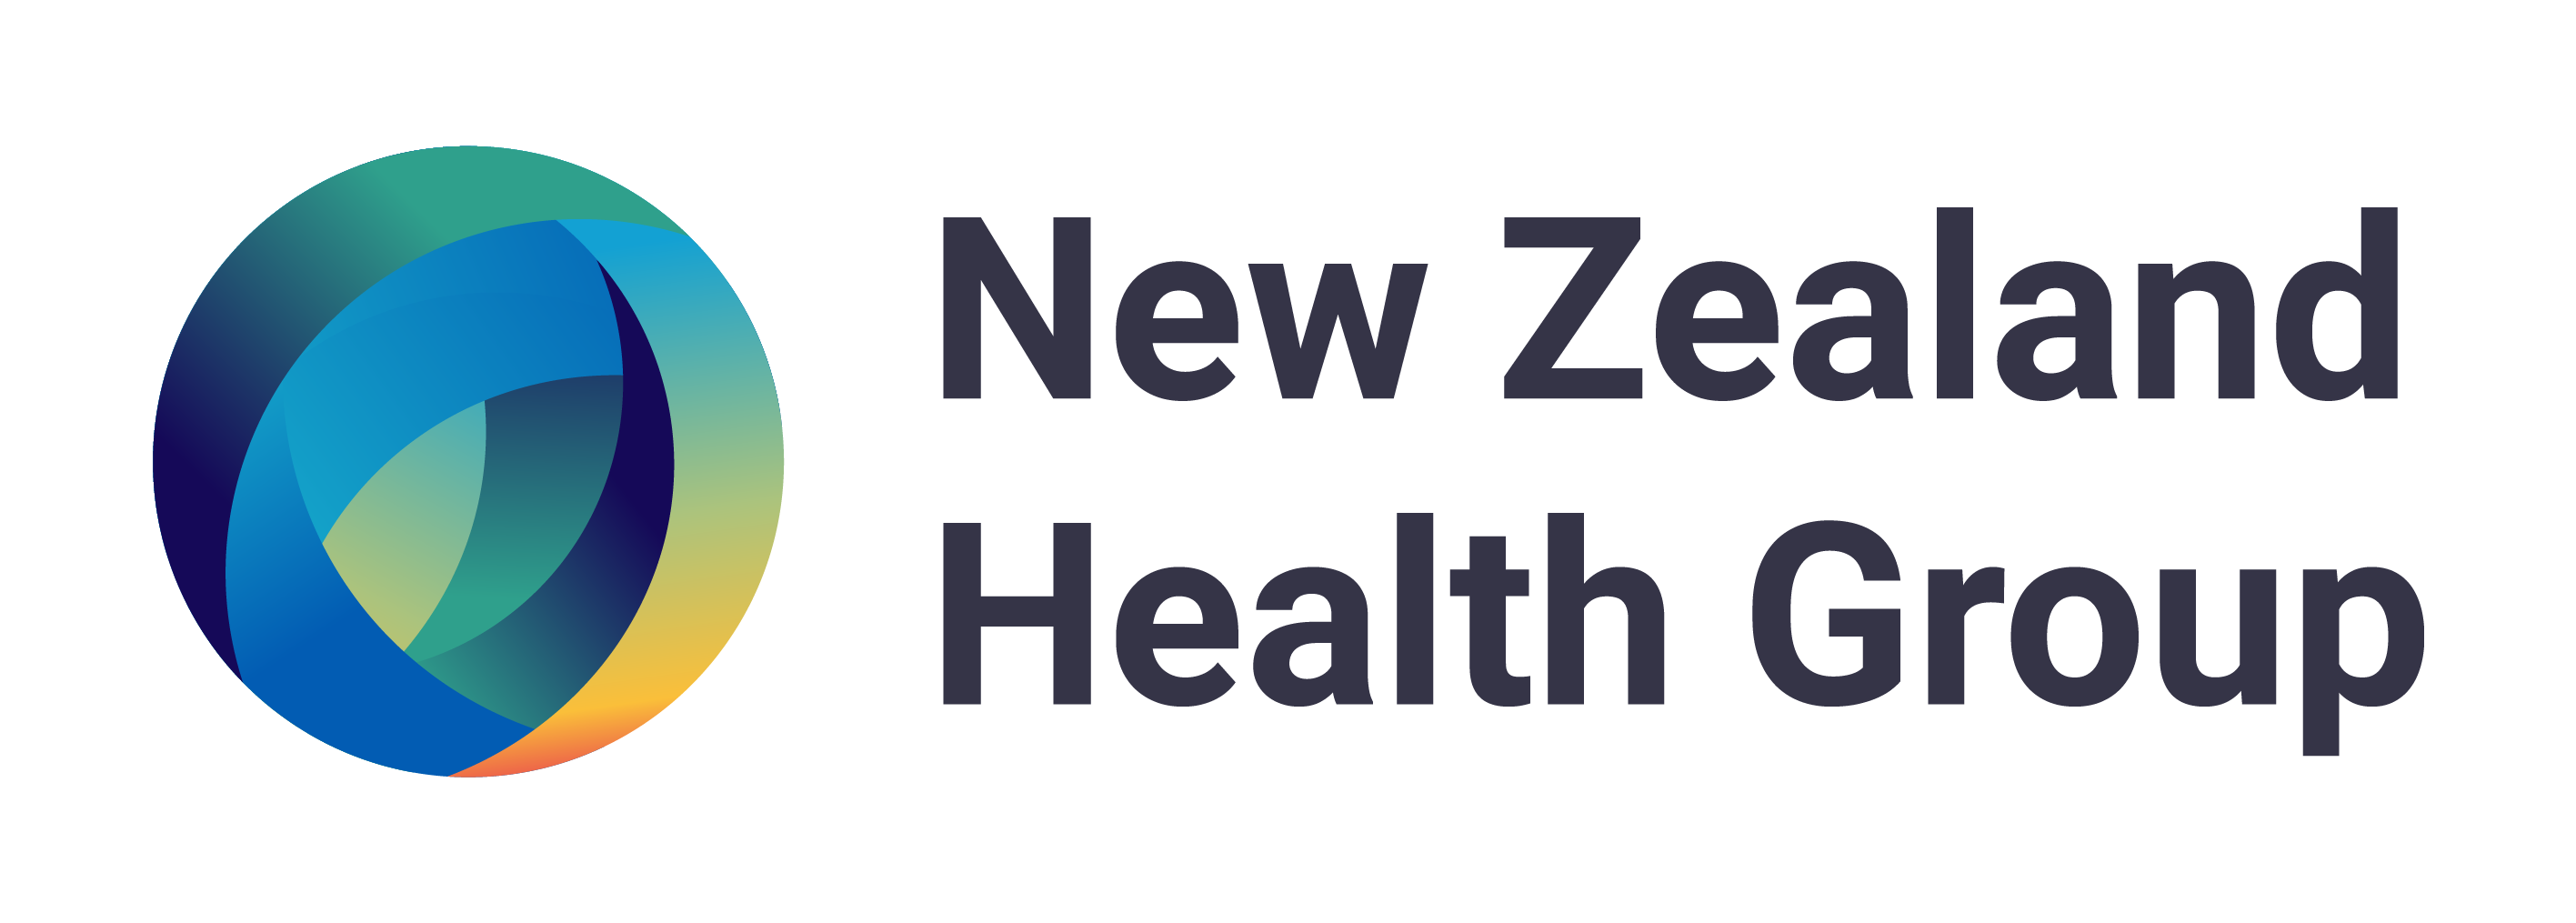 new zealand health group logo